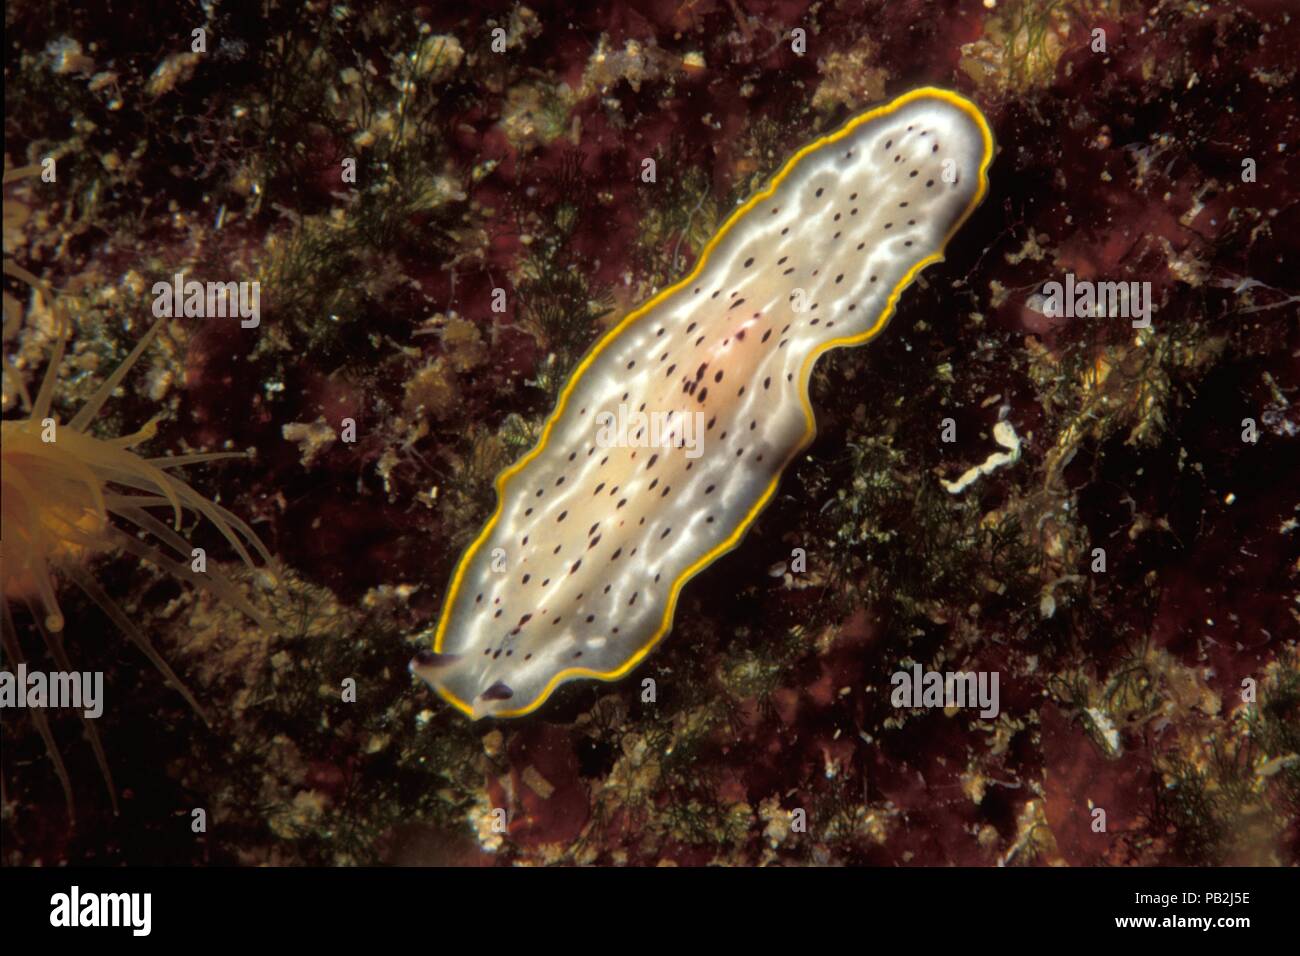 Moseley's flatworm, Gefleckter Plattwurm, Prostheceraeus moseley, Ibiza, Mediterranean, Mittelmeer Stock Photo